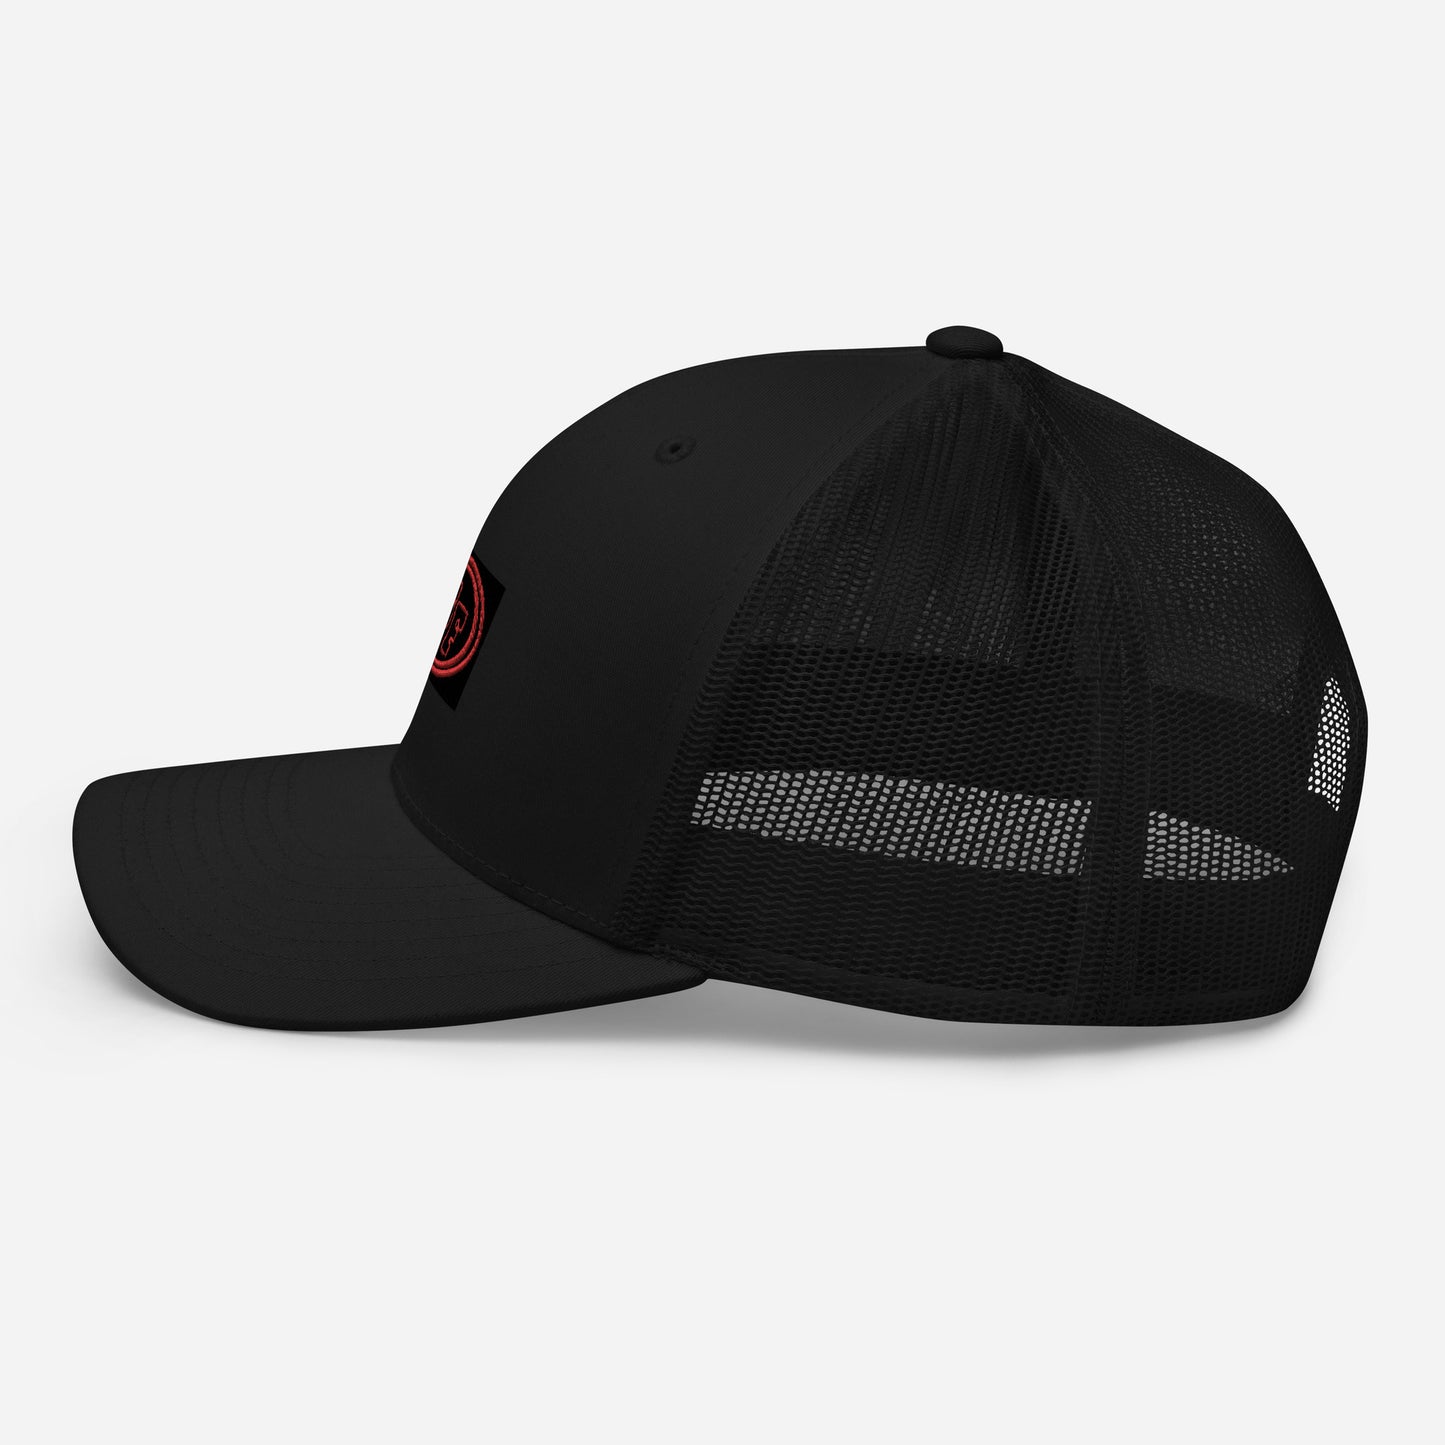 San Francisco Hat / 49ers hat / Kyle Shanahan Trucker Cap